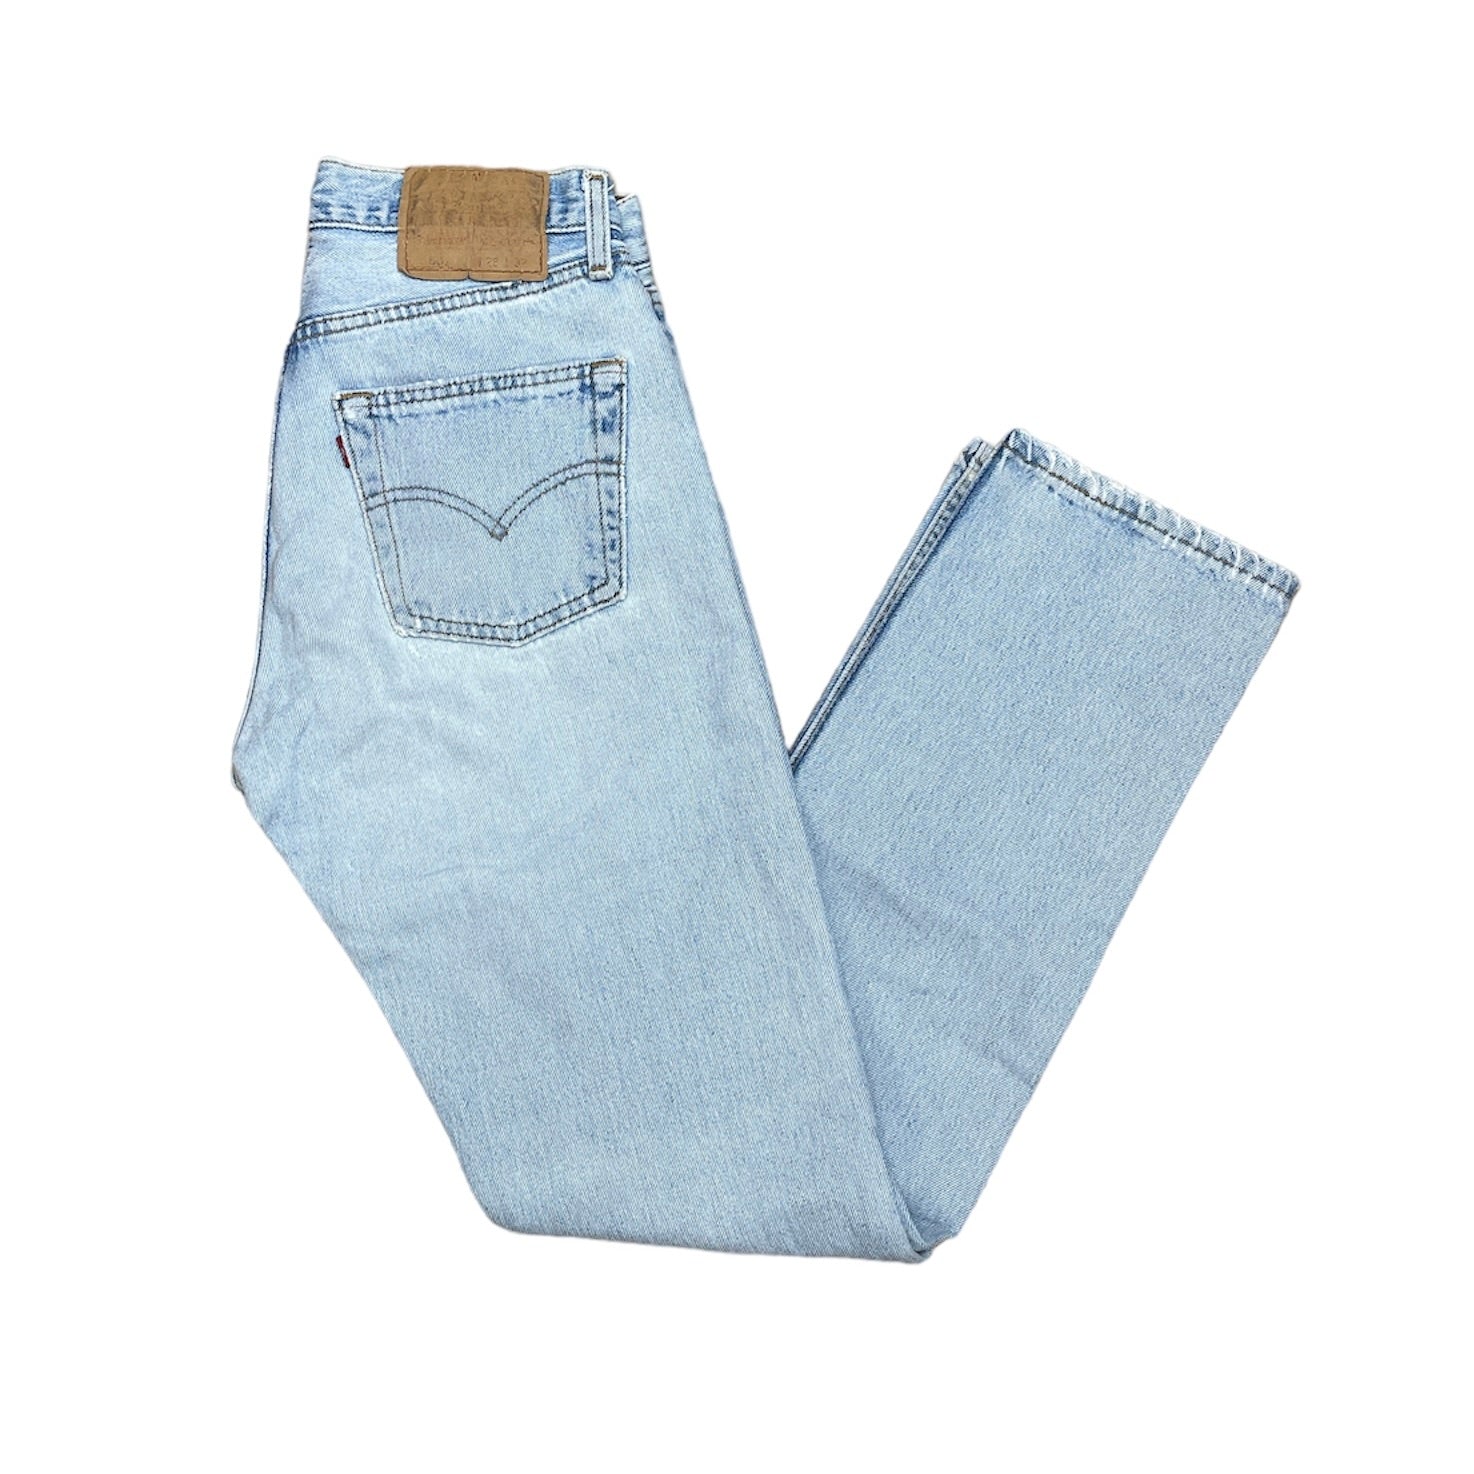 Vintage Levis 501 Light Blue Distressed Jeans (W28/32)